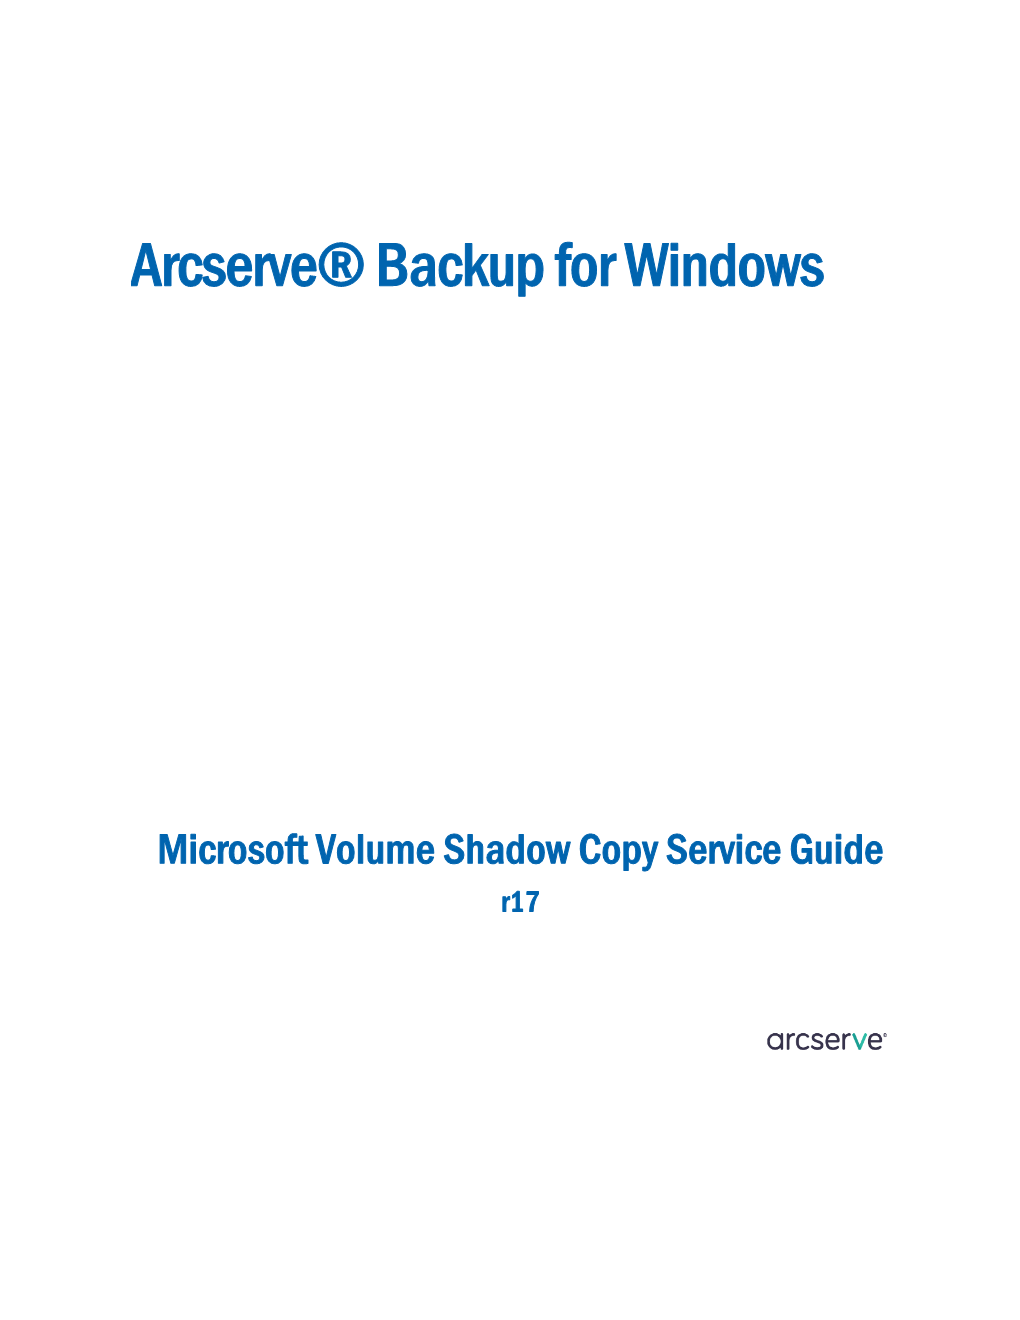 Microsoft Volume Shadow Copy Service Guide R17